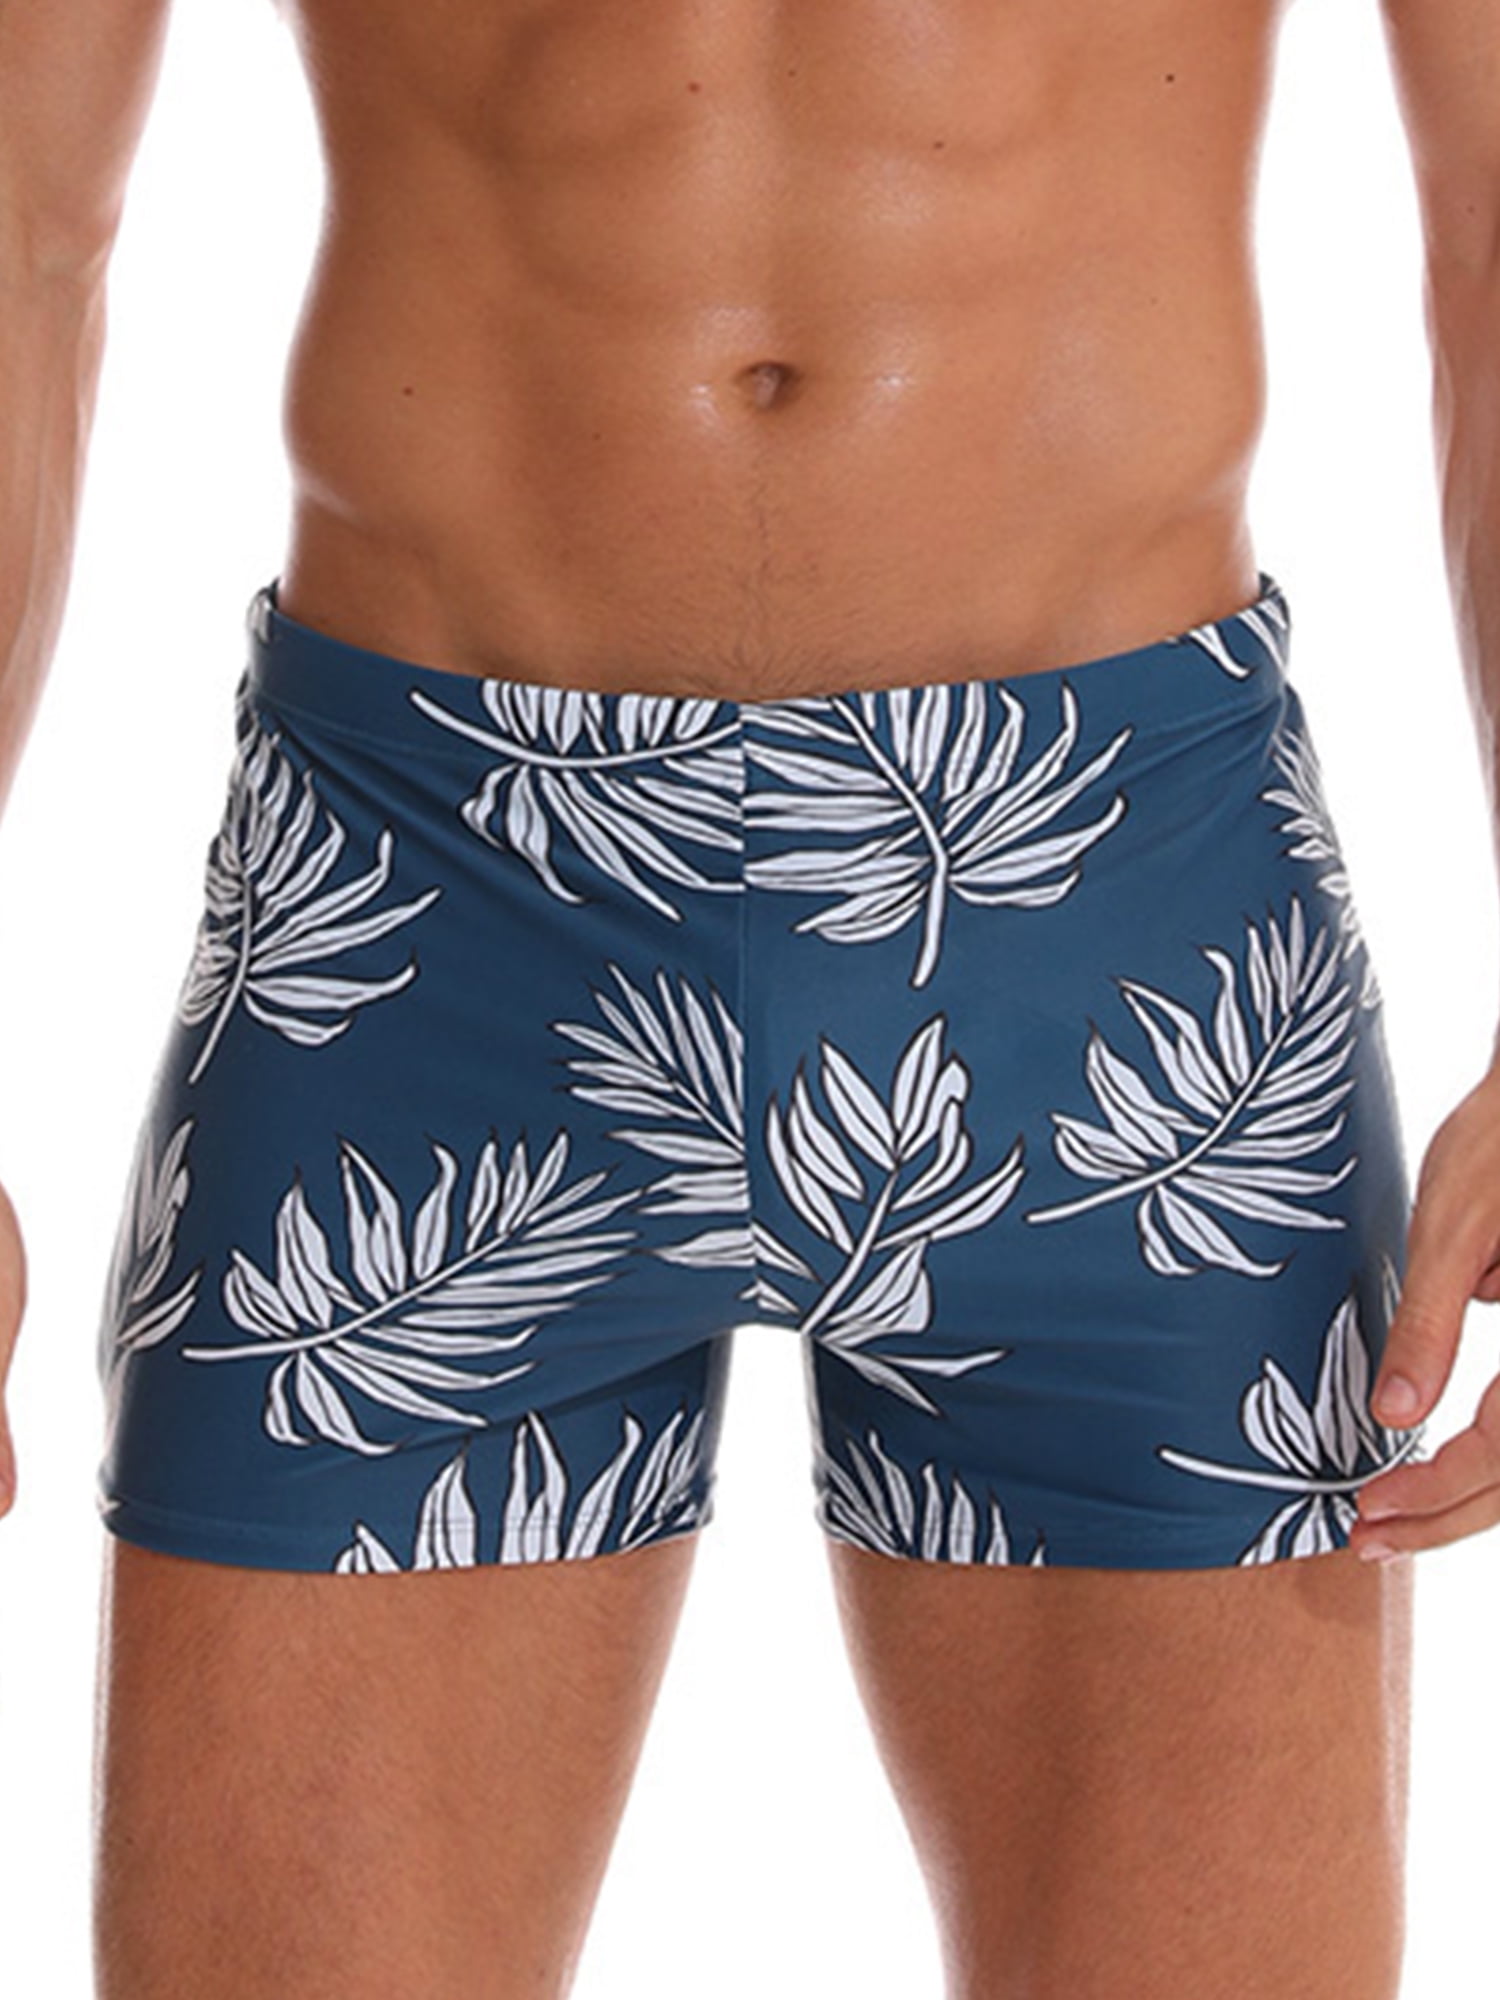 Bikini Drawstring Multicolored #2 Speedo Type Briefs Men Swim trunks 